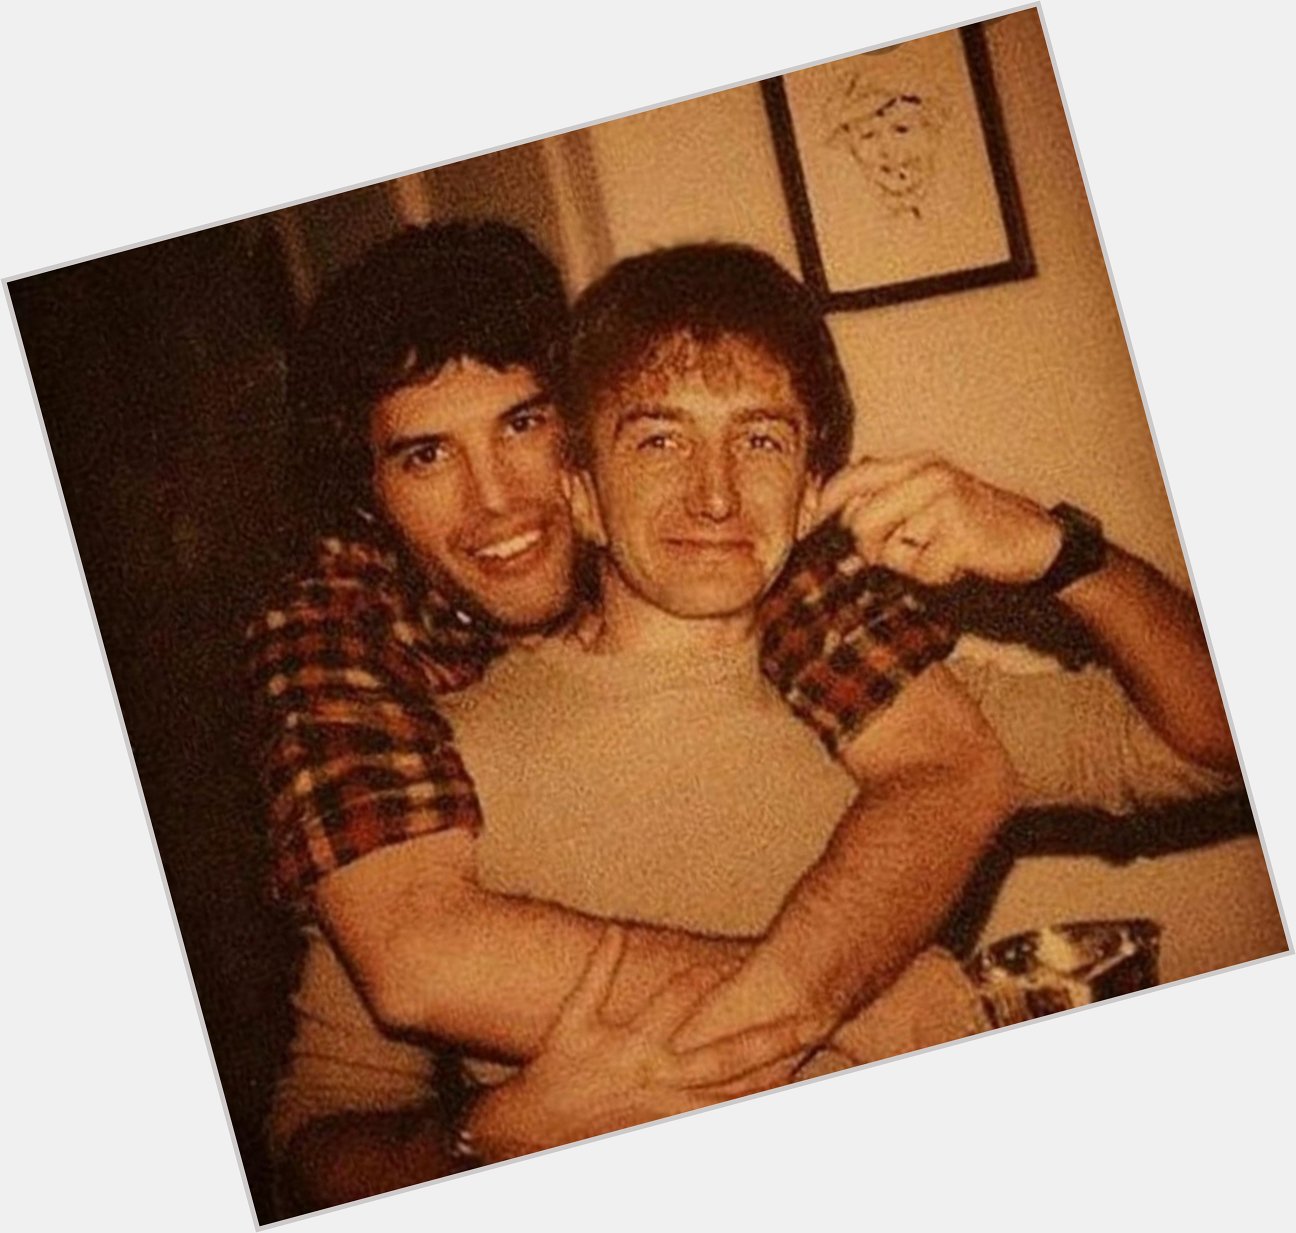 Happy Birthday John Deacon  Beautiful friendship and memories with Freddie Mercury     